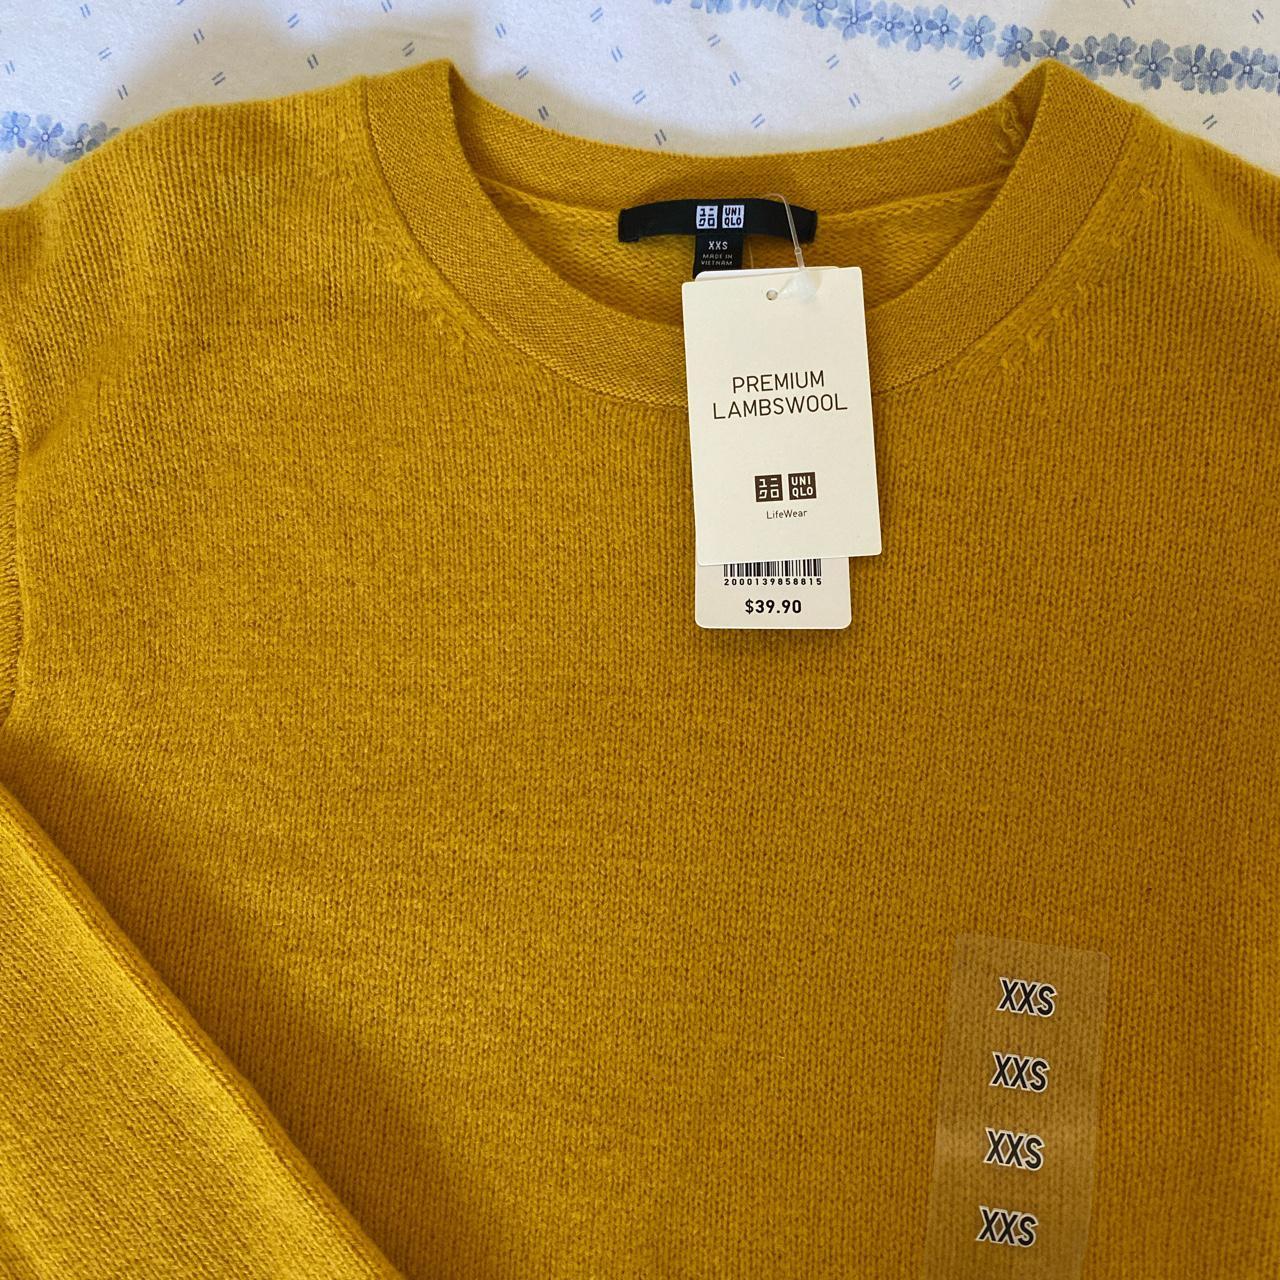 Warm mustard yellow lambs wool sweater from Uniqlo.... - Depop